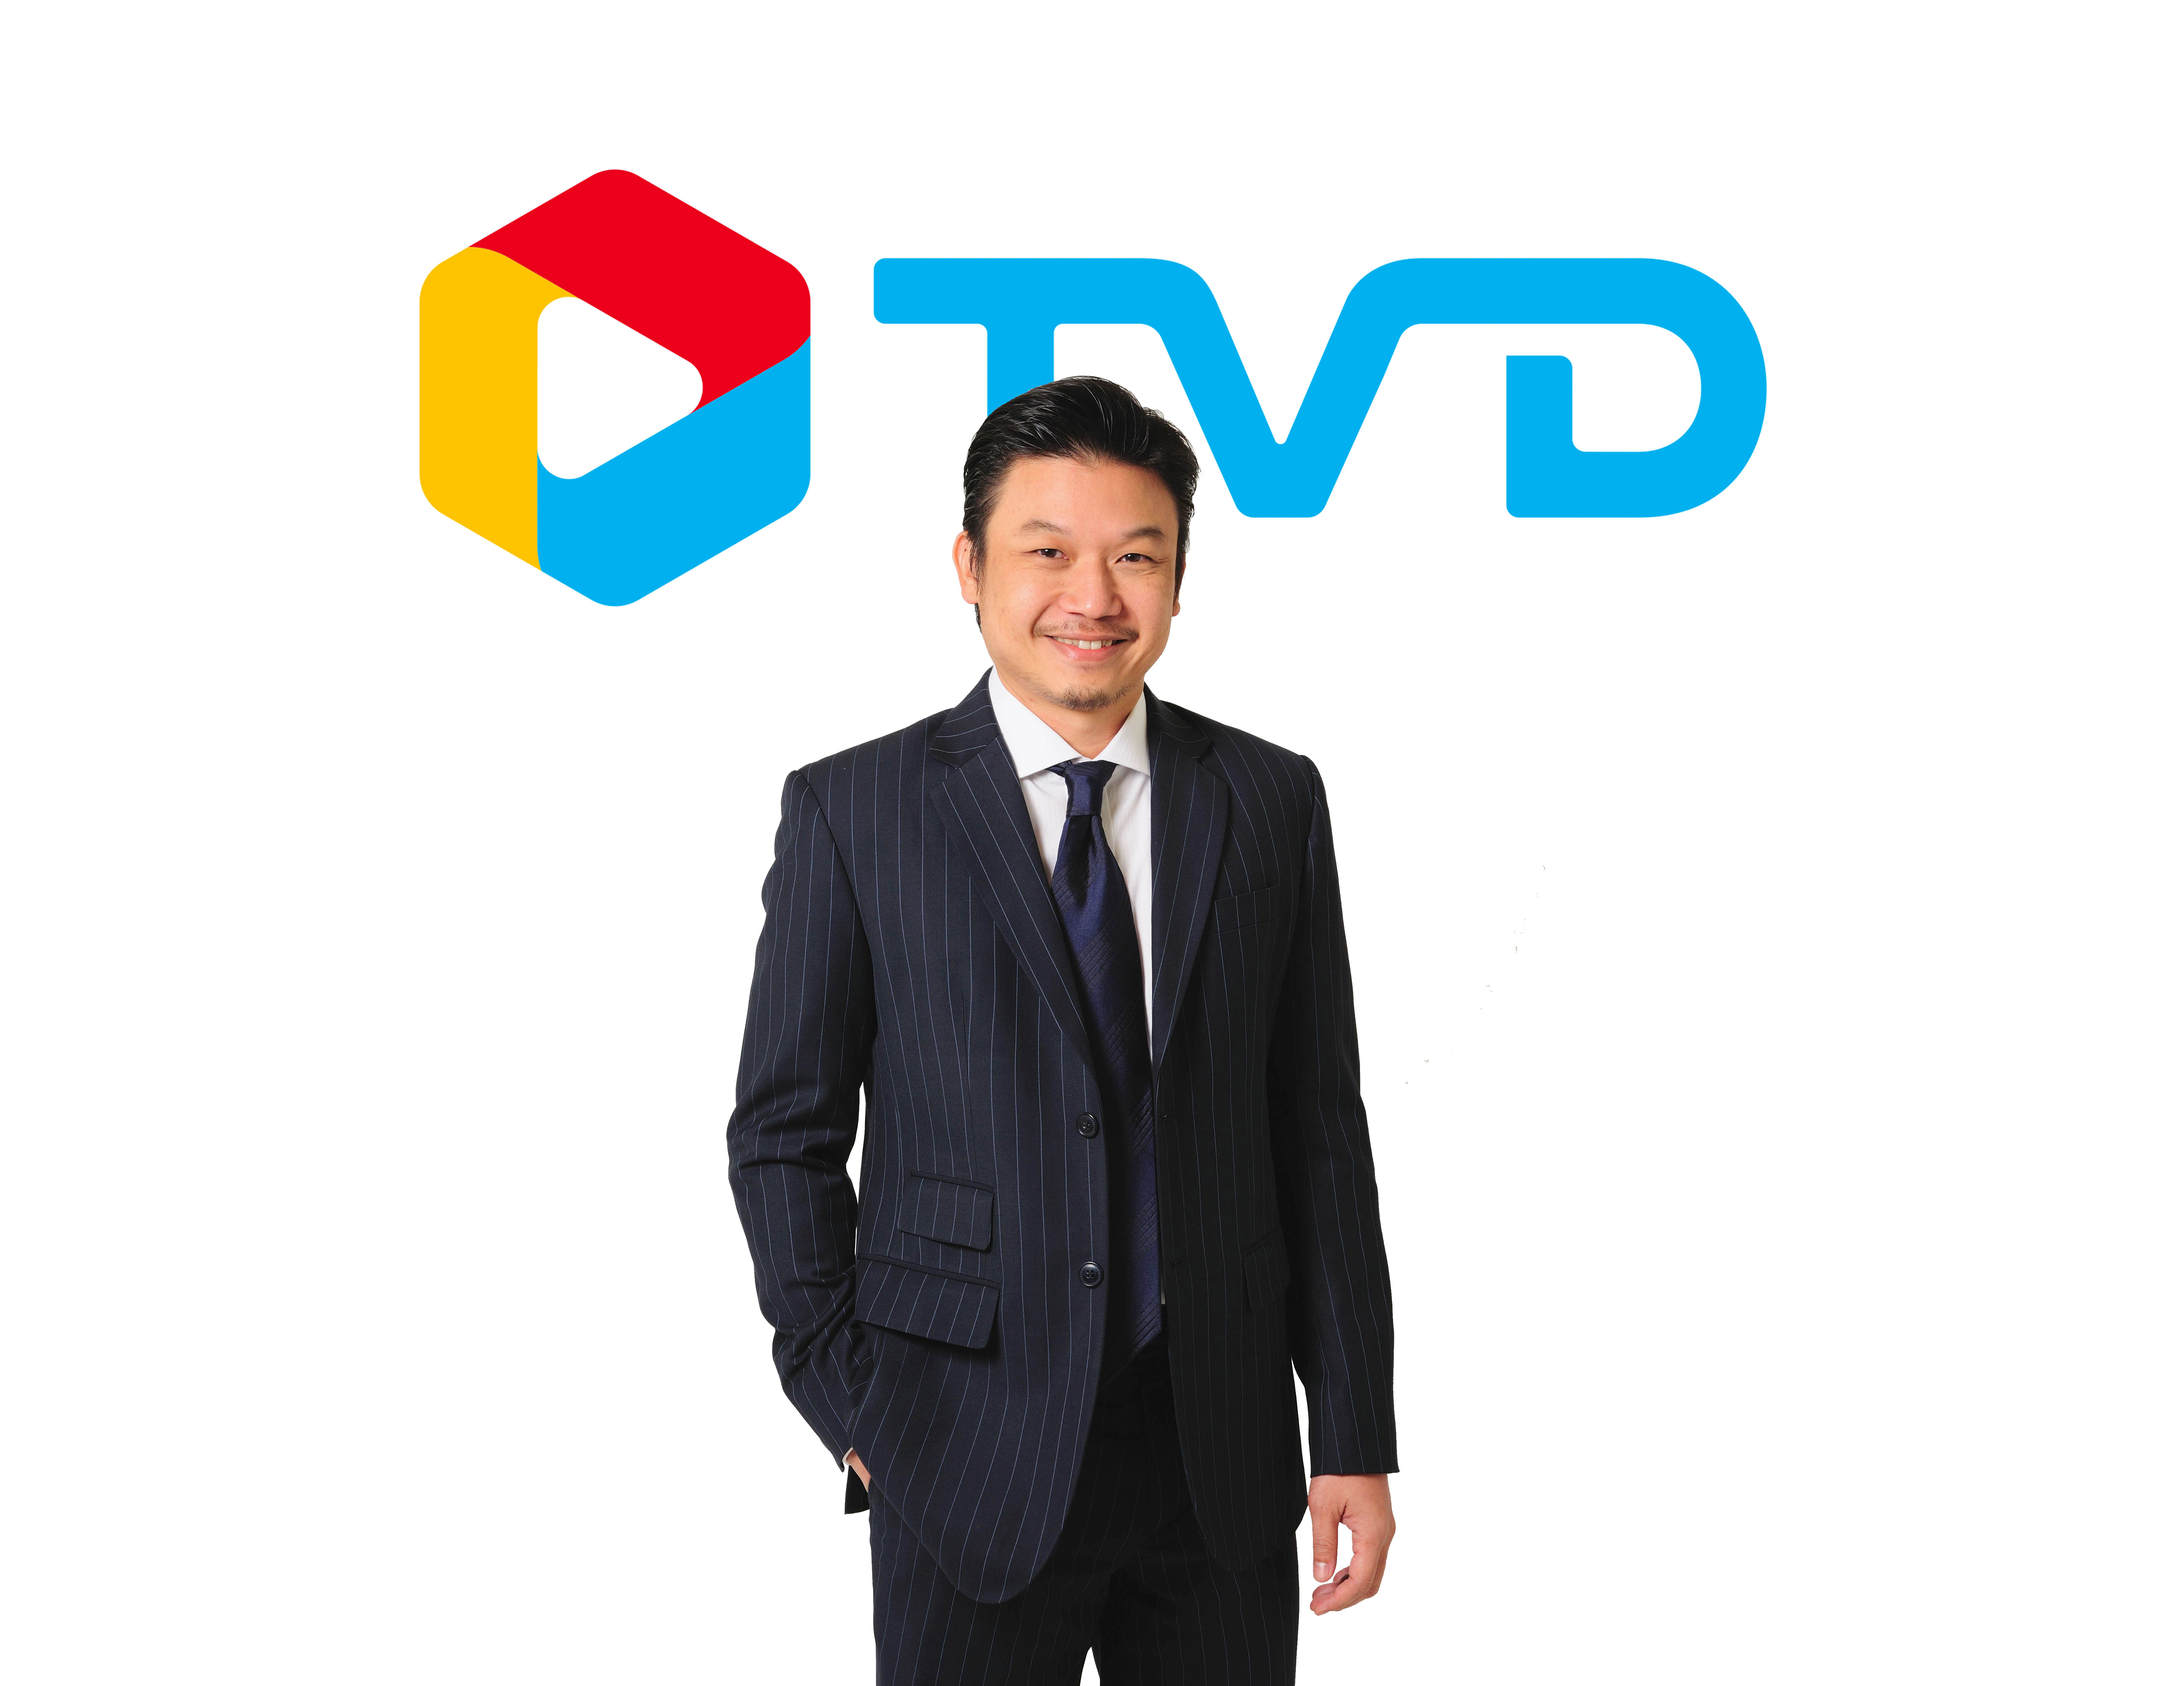 TVD คืนกำไรนักช้อป จัดแคมเปญใหญ่ 9.9 Super Sale ส่งท้ายไตรมาส 3